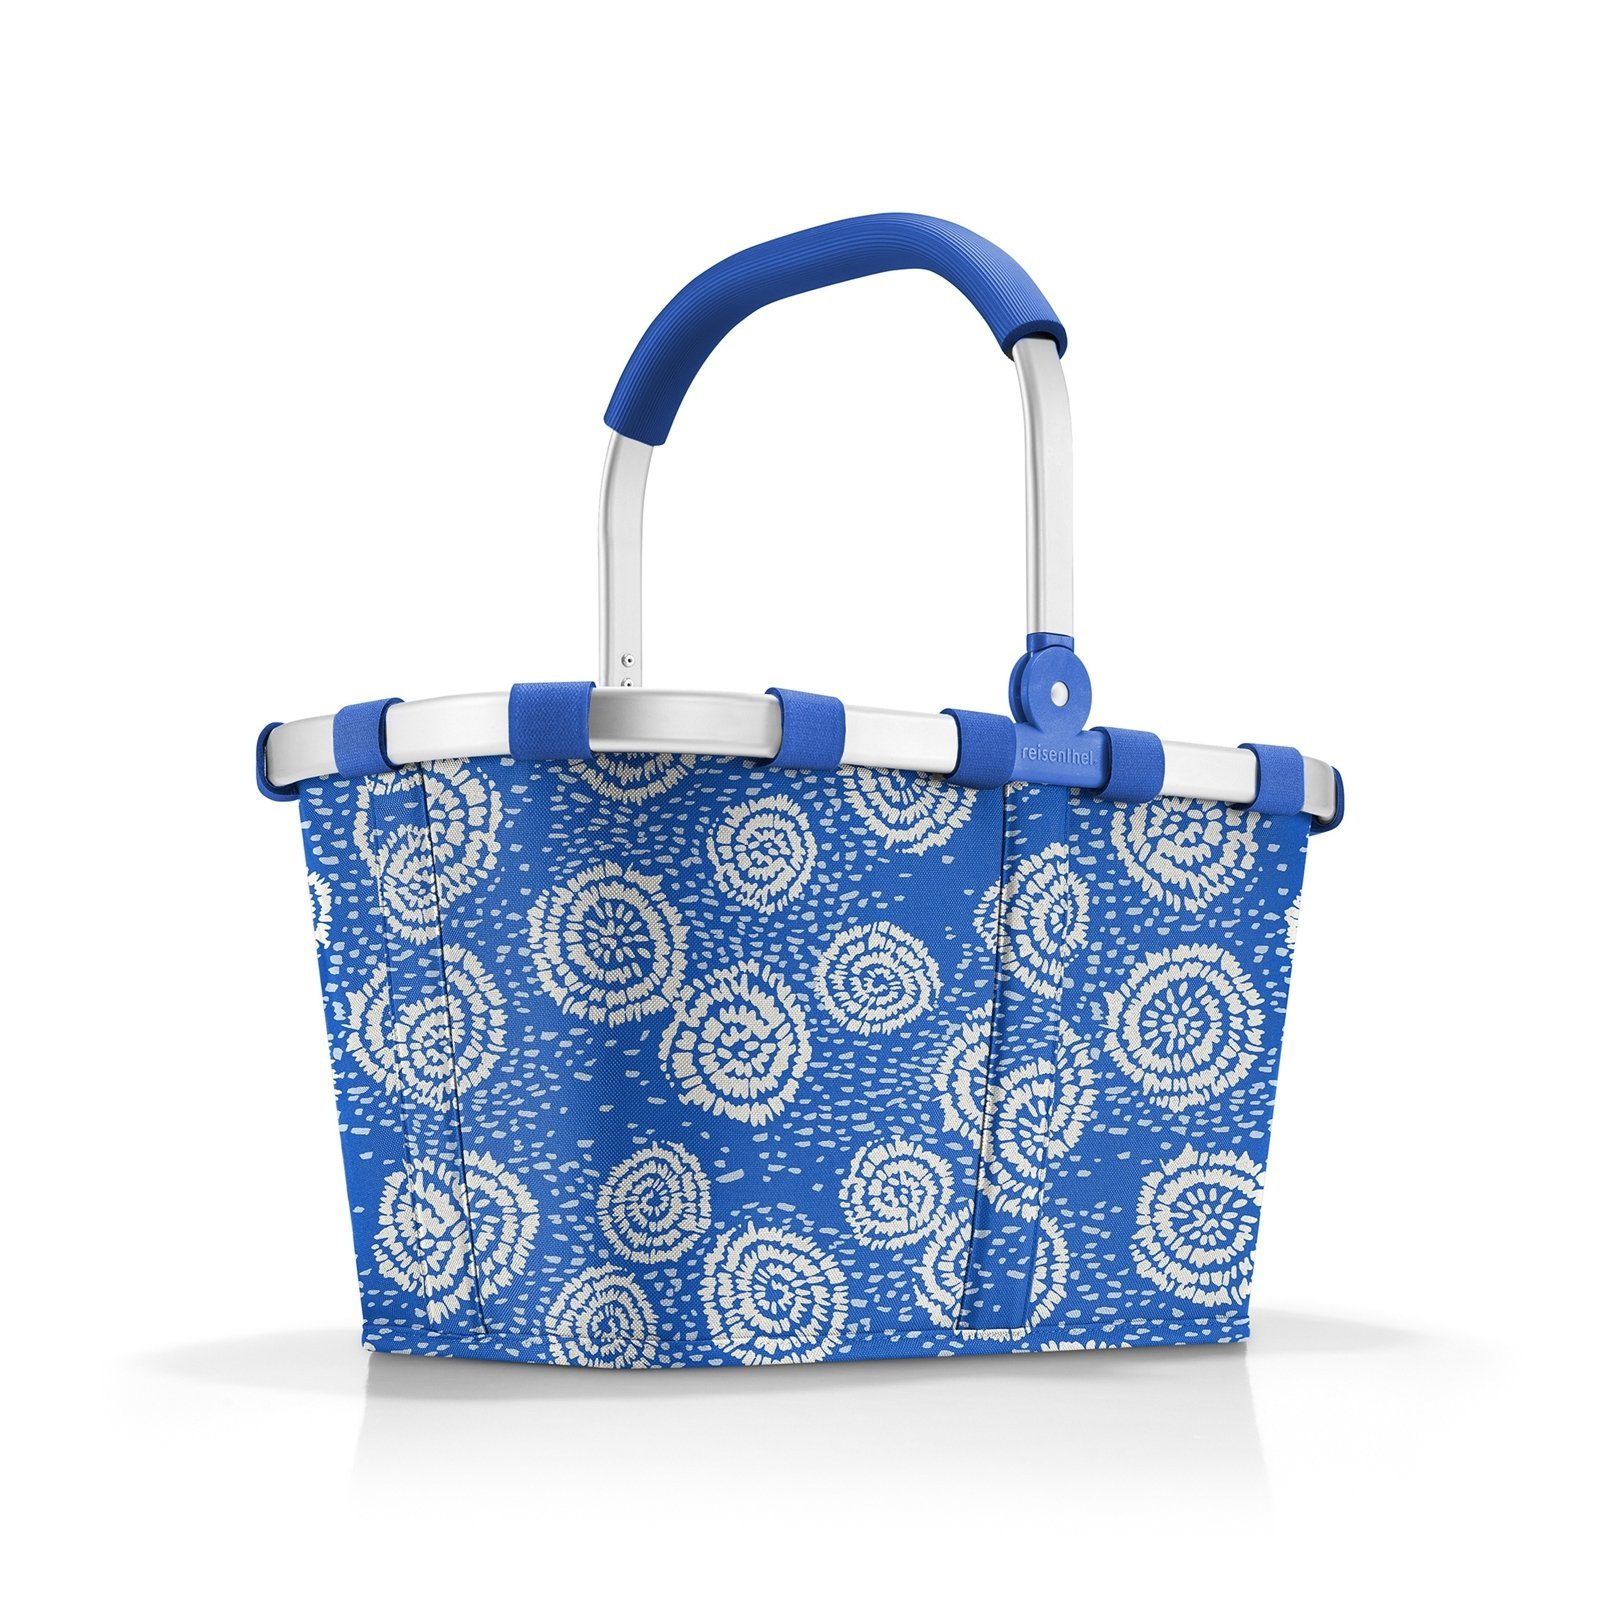 Einkaufskorb Einkaufskorb REISENTHEL® Shopping, Carrybag, blue 22 l strong batik